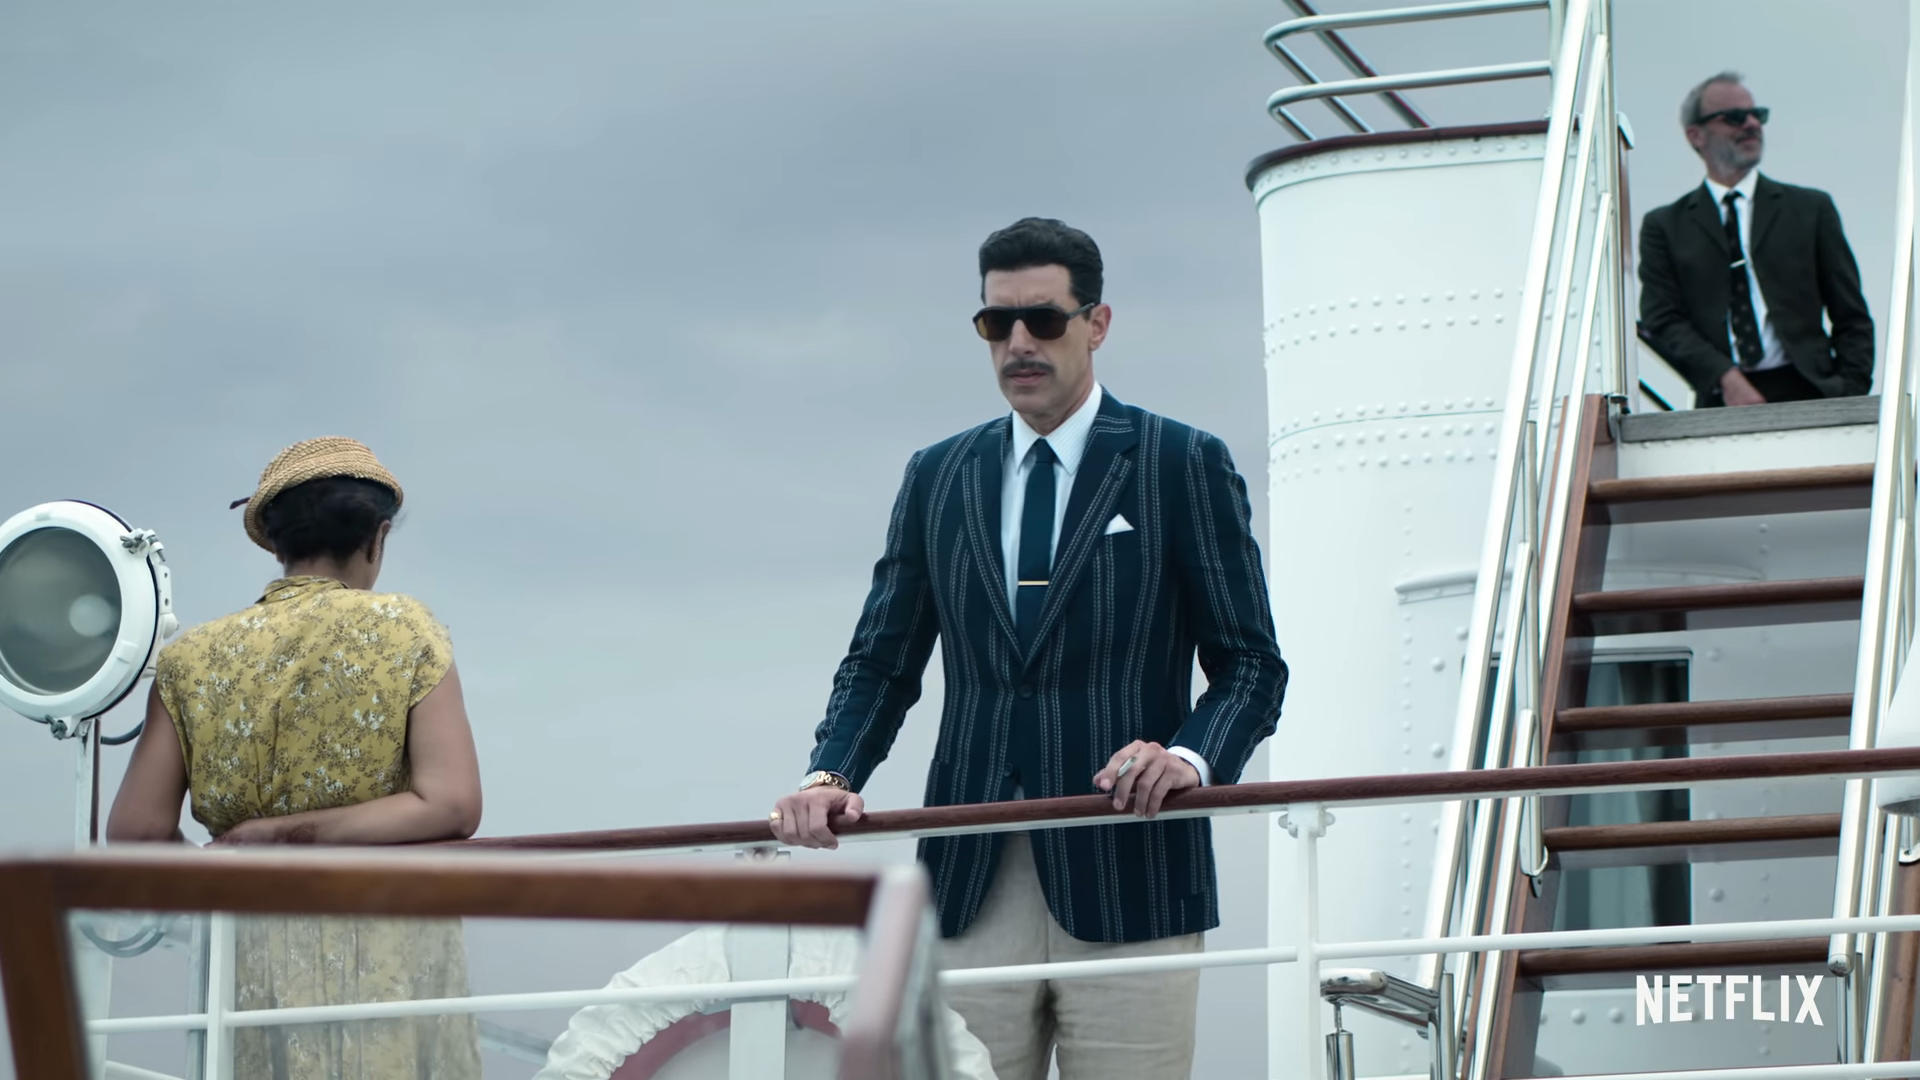 The Spy Netflix Trailer, Netflix Drama Series, Sacha Baron Cohen The Spy, Coming to Netflix in 2019